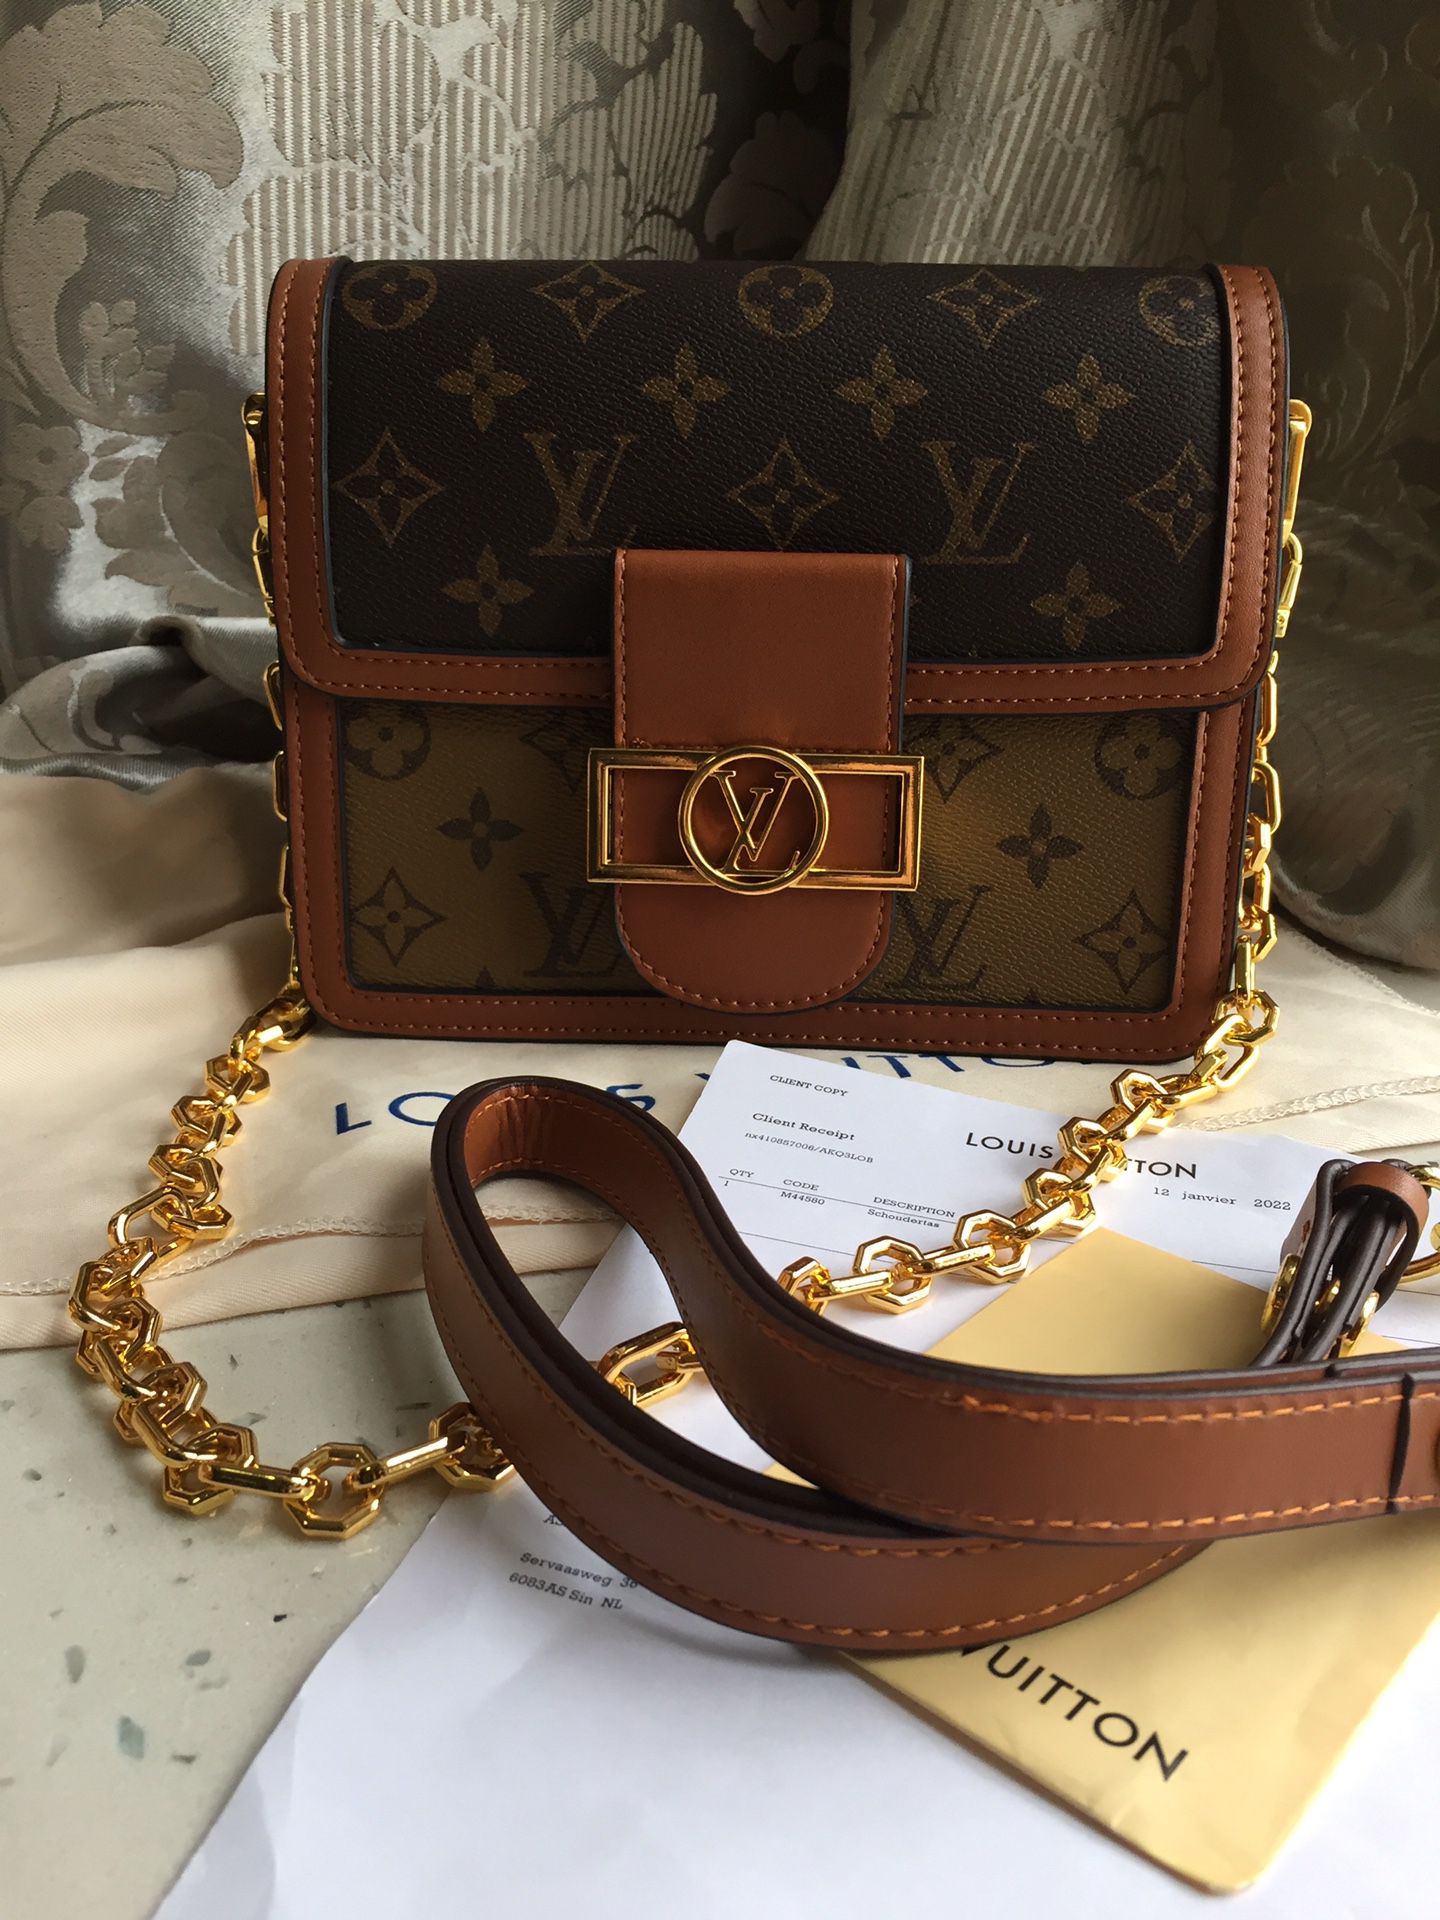 100% Authentic Louis Vuitton LV Colorful Bag Cowhide Handbag Sale in Chicago, - OfferUp